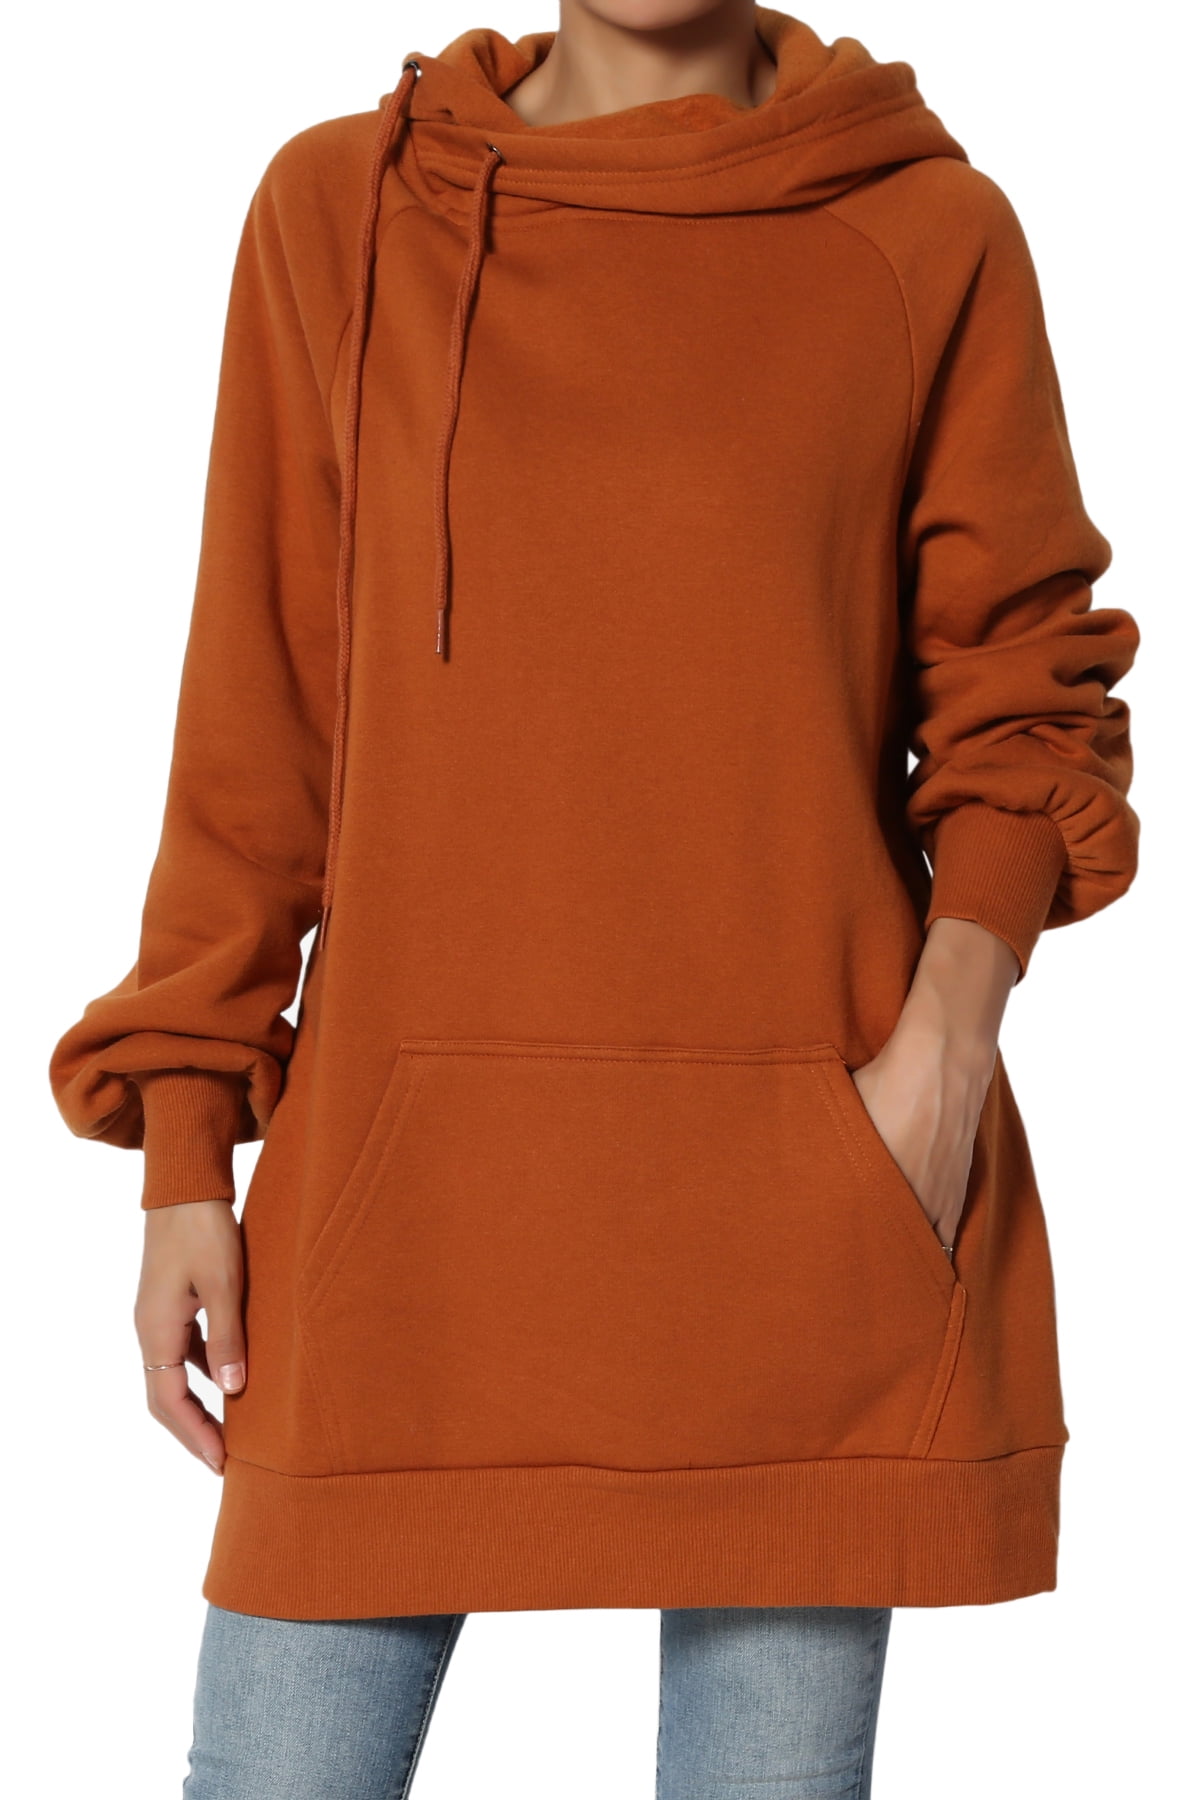 TheMogan Women's S~3X Drawstring Fleece Relaxed Hooded Pullover Tunic Sweatshirts - Walmart.com